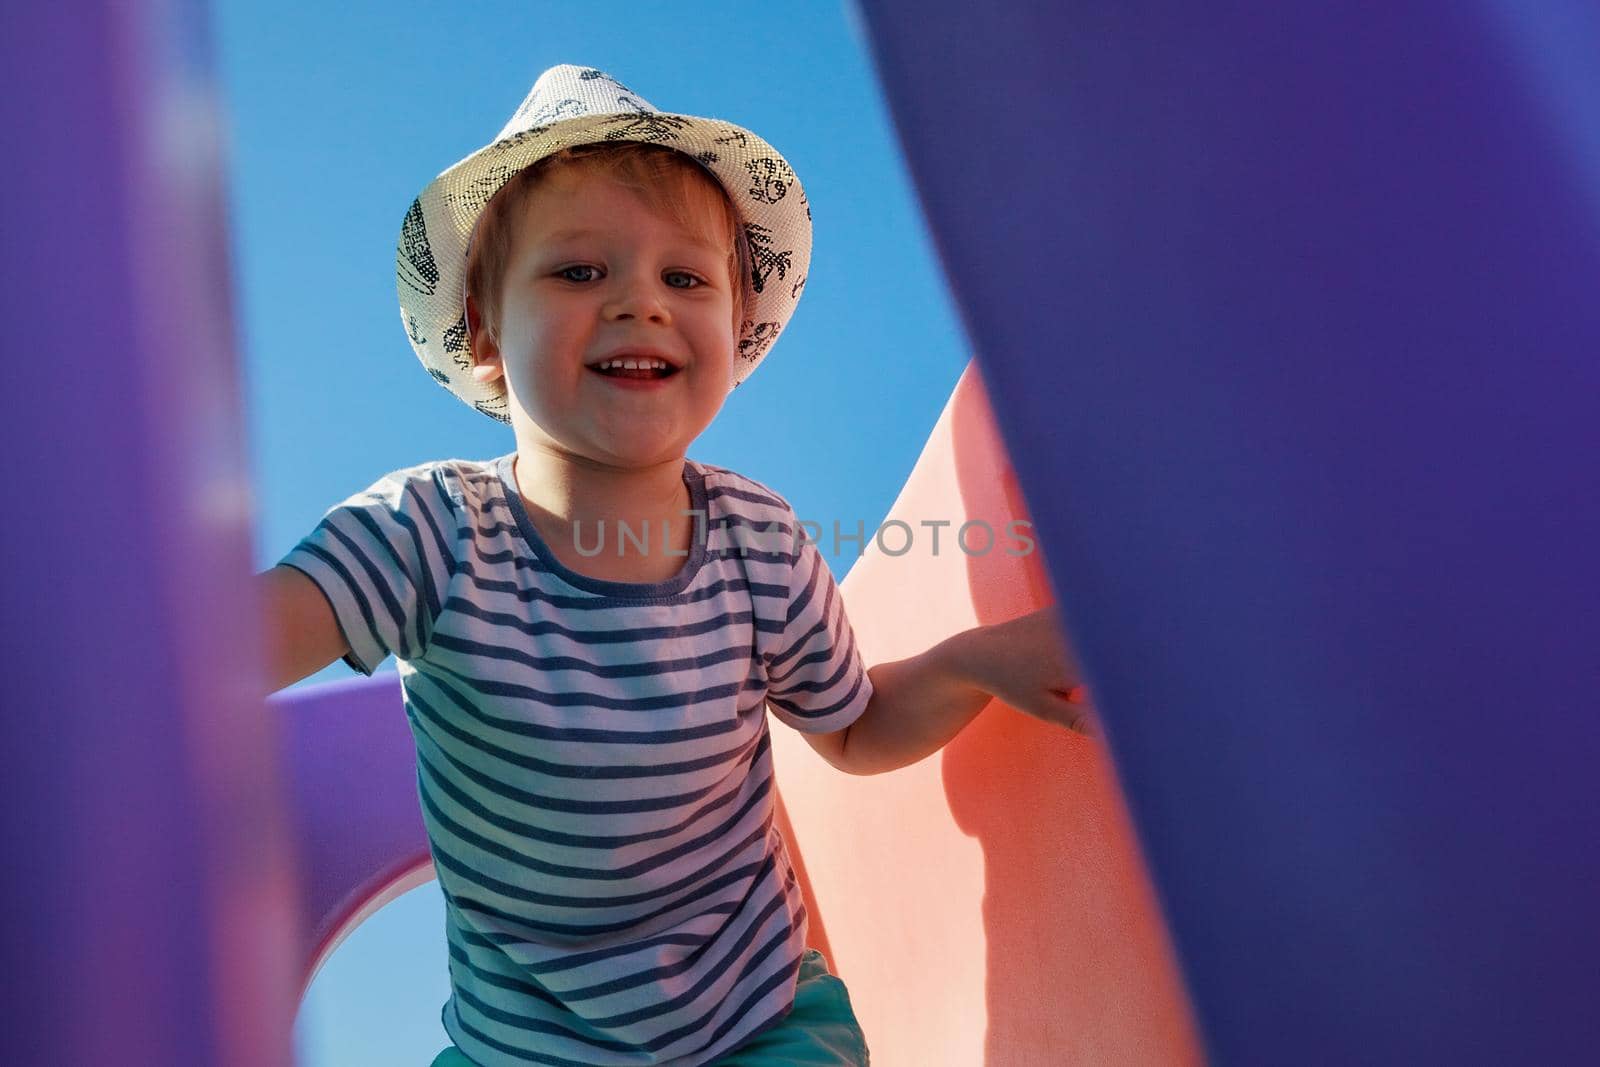 A little naughty boy runs through the plastic maze of a playground